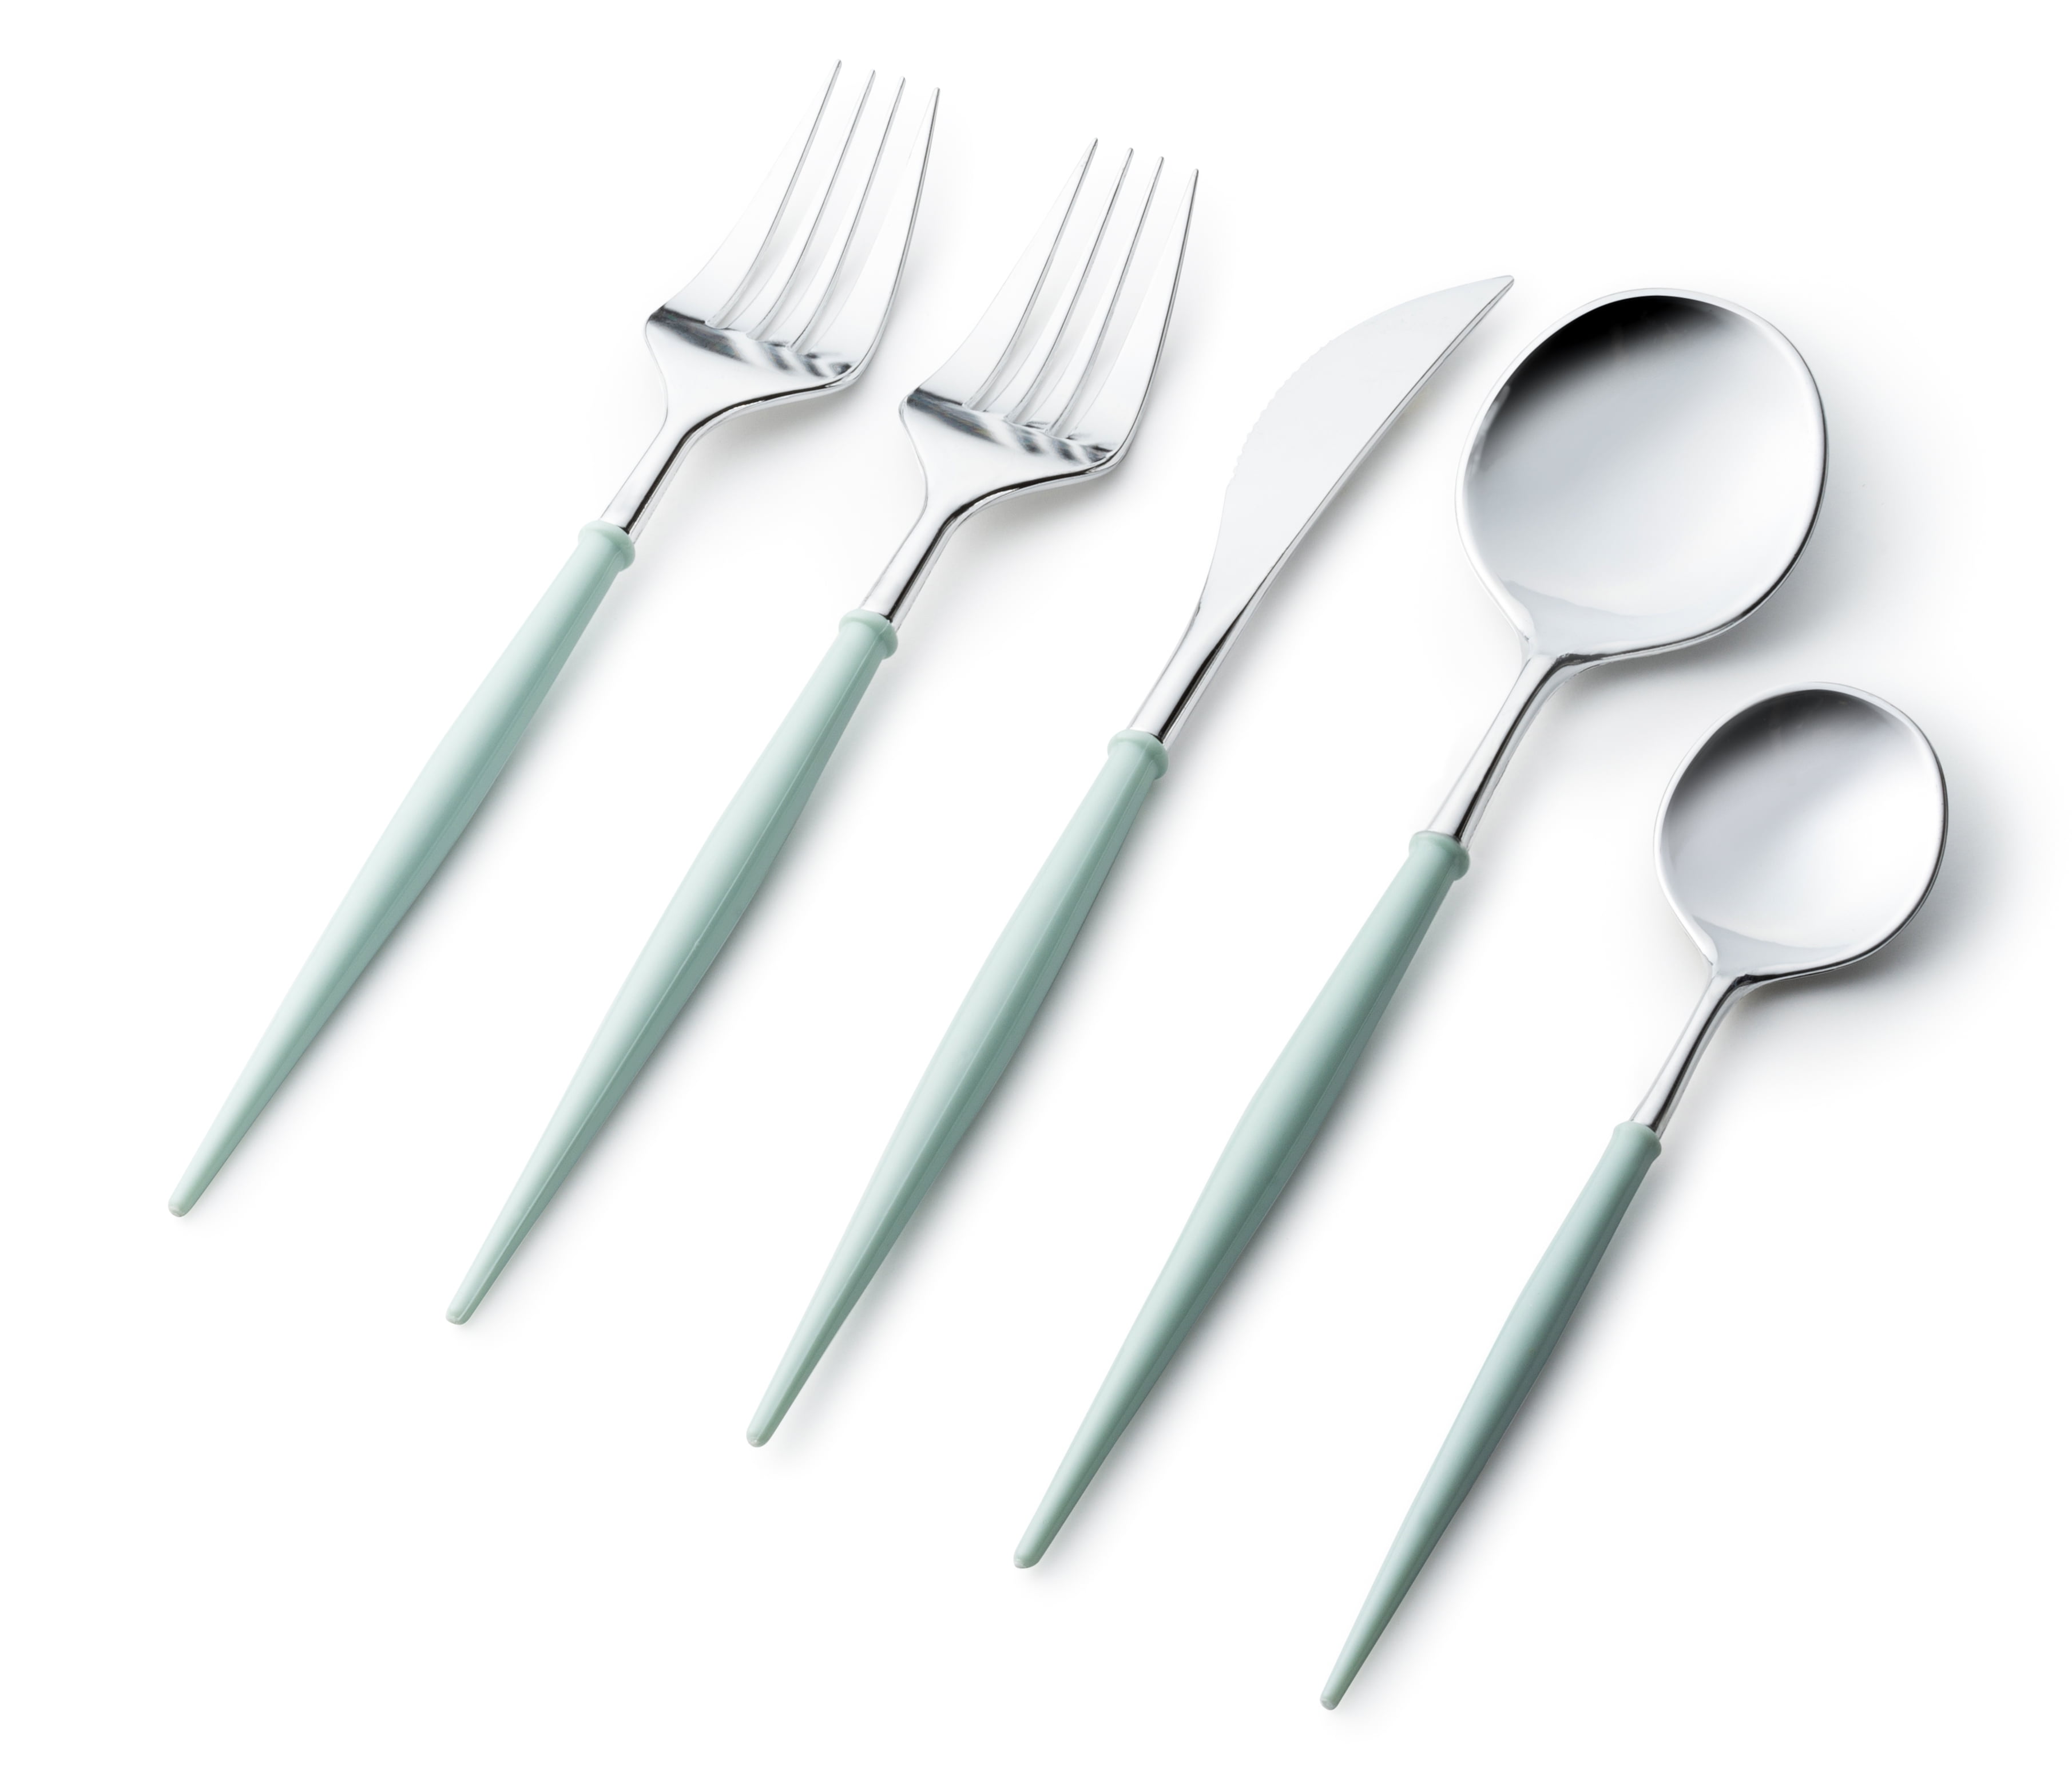 Debeauty Plastic Cutlery Set - Property Furniture